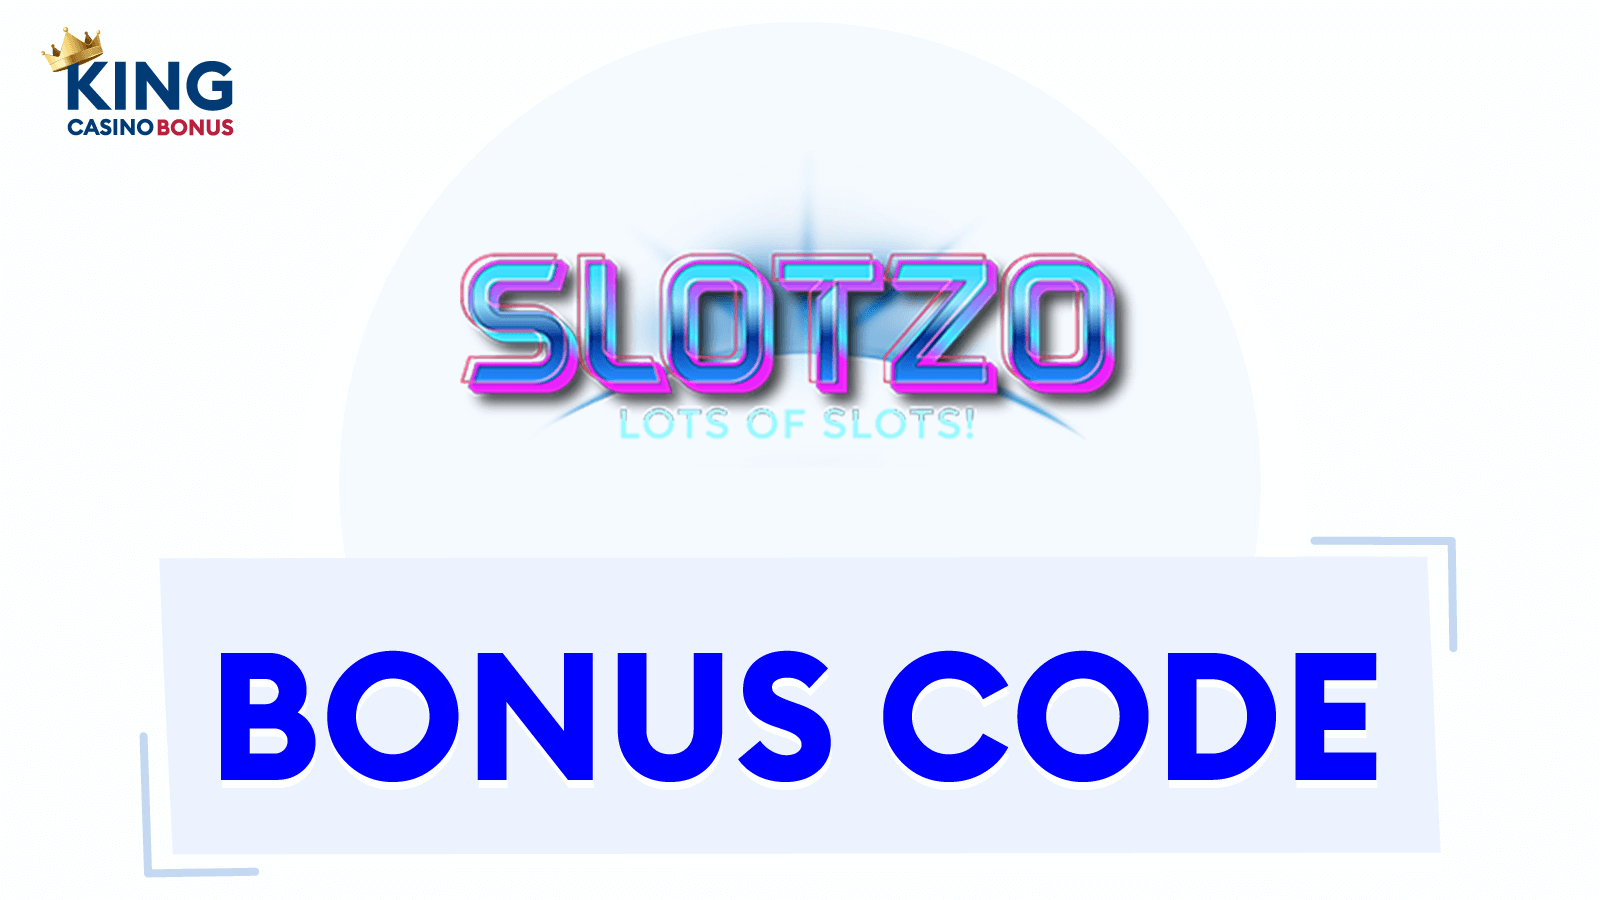 Slotzo Casino Bonus Codes